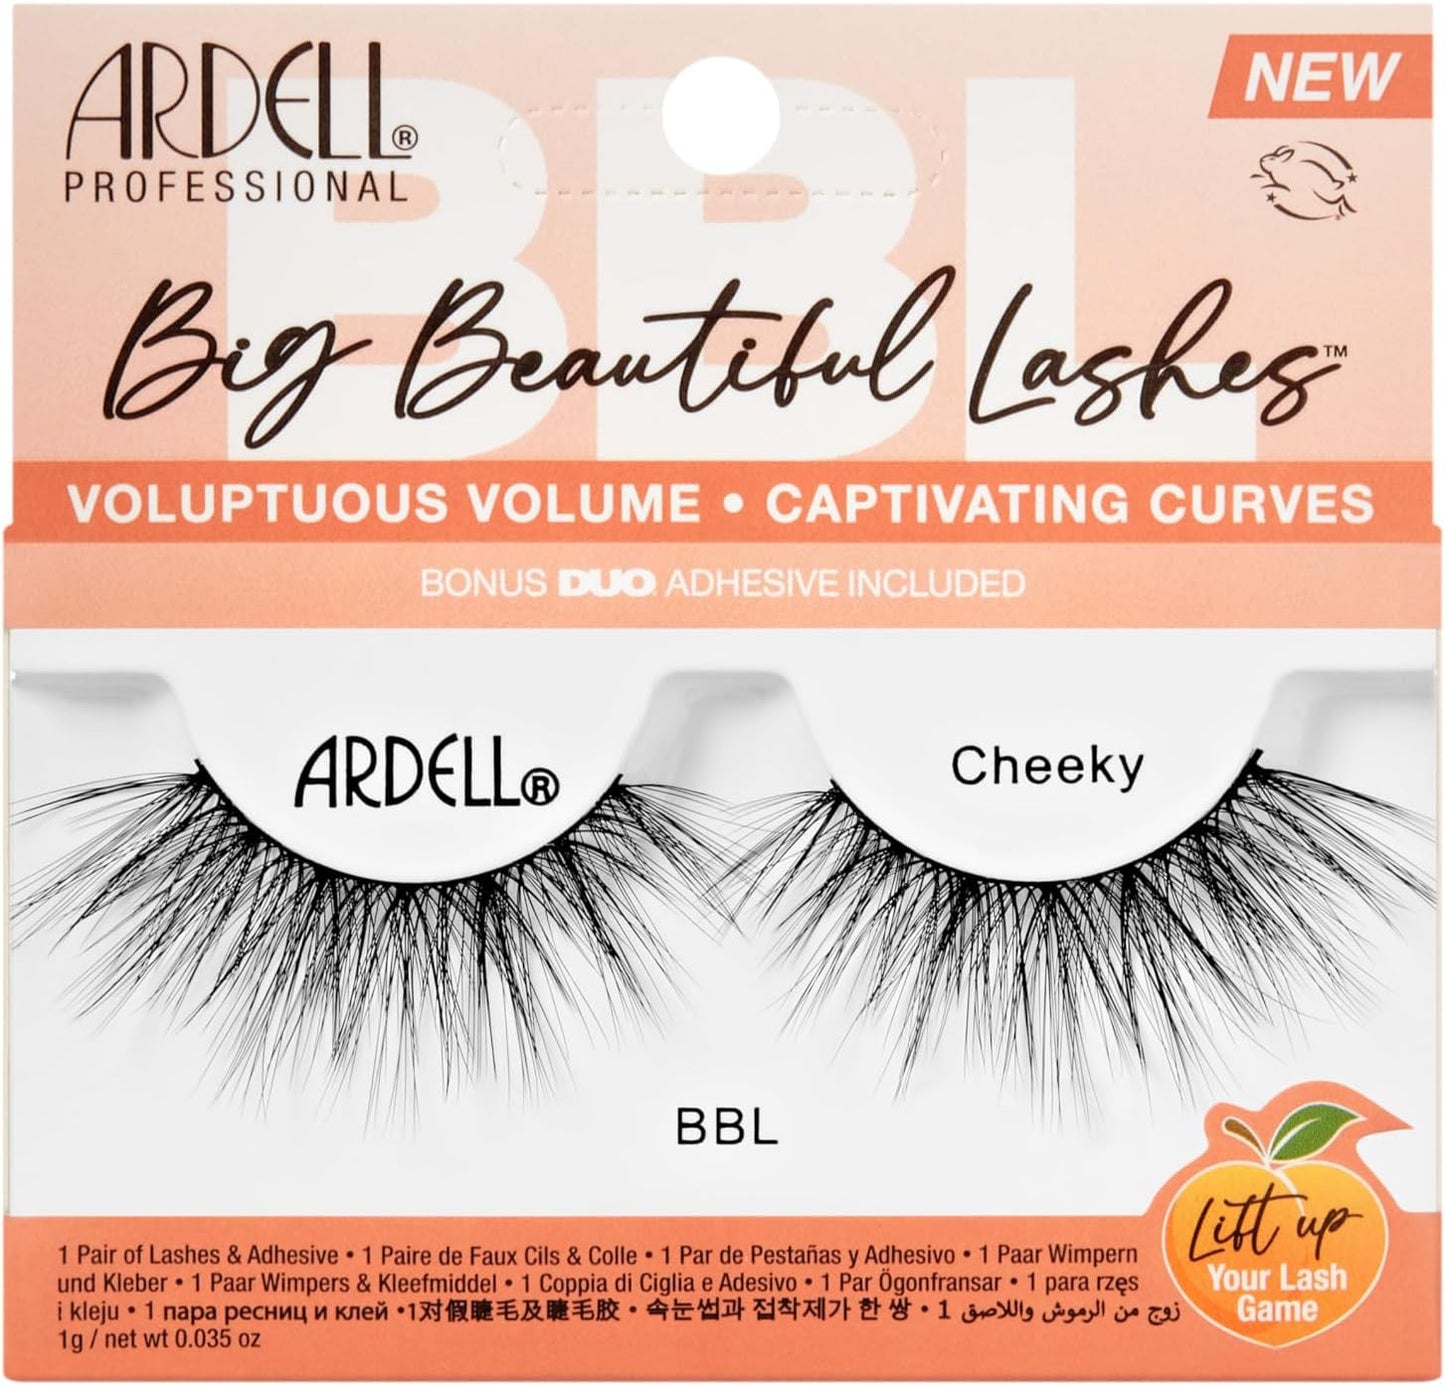 Ardell Big Beautiful Lashes Cheeky False Eyelashes, Duo Adhesive Included, Medium Volume, 21 mm Length, Vegan Friendly, 1 Pair (Pack of 1)